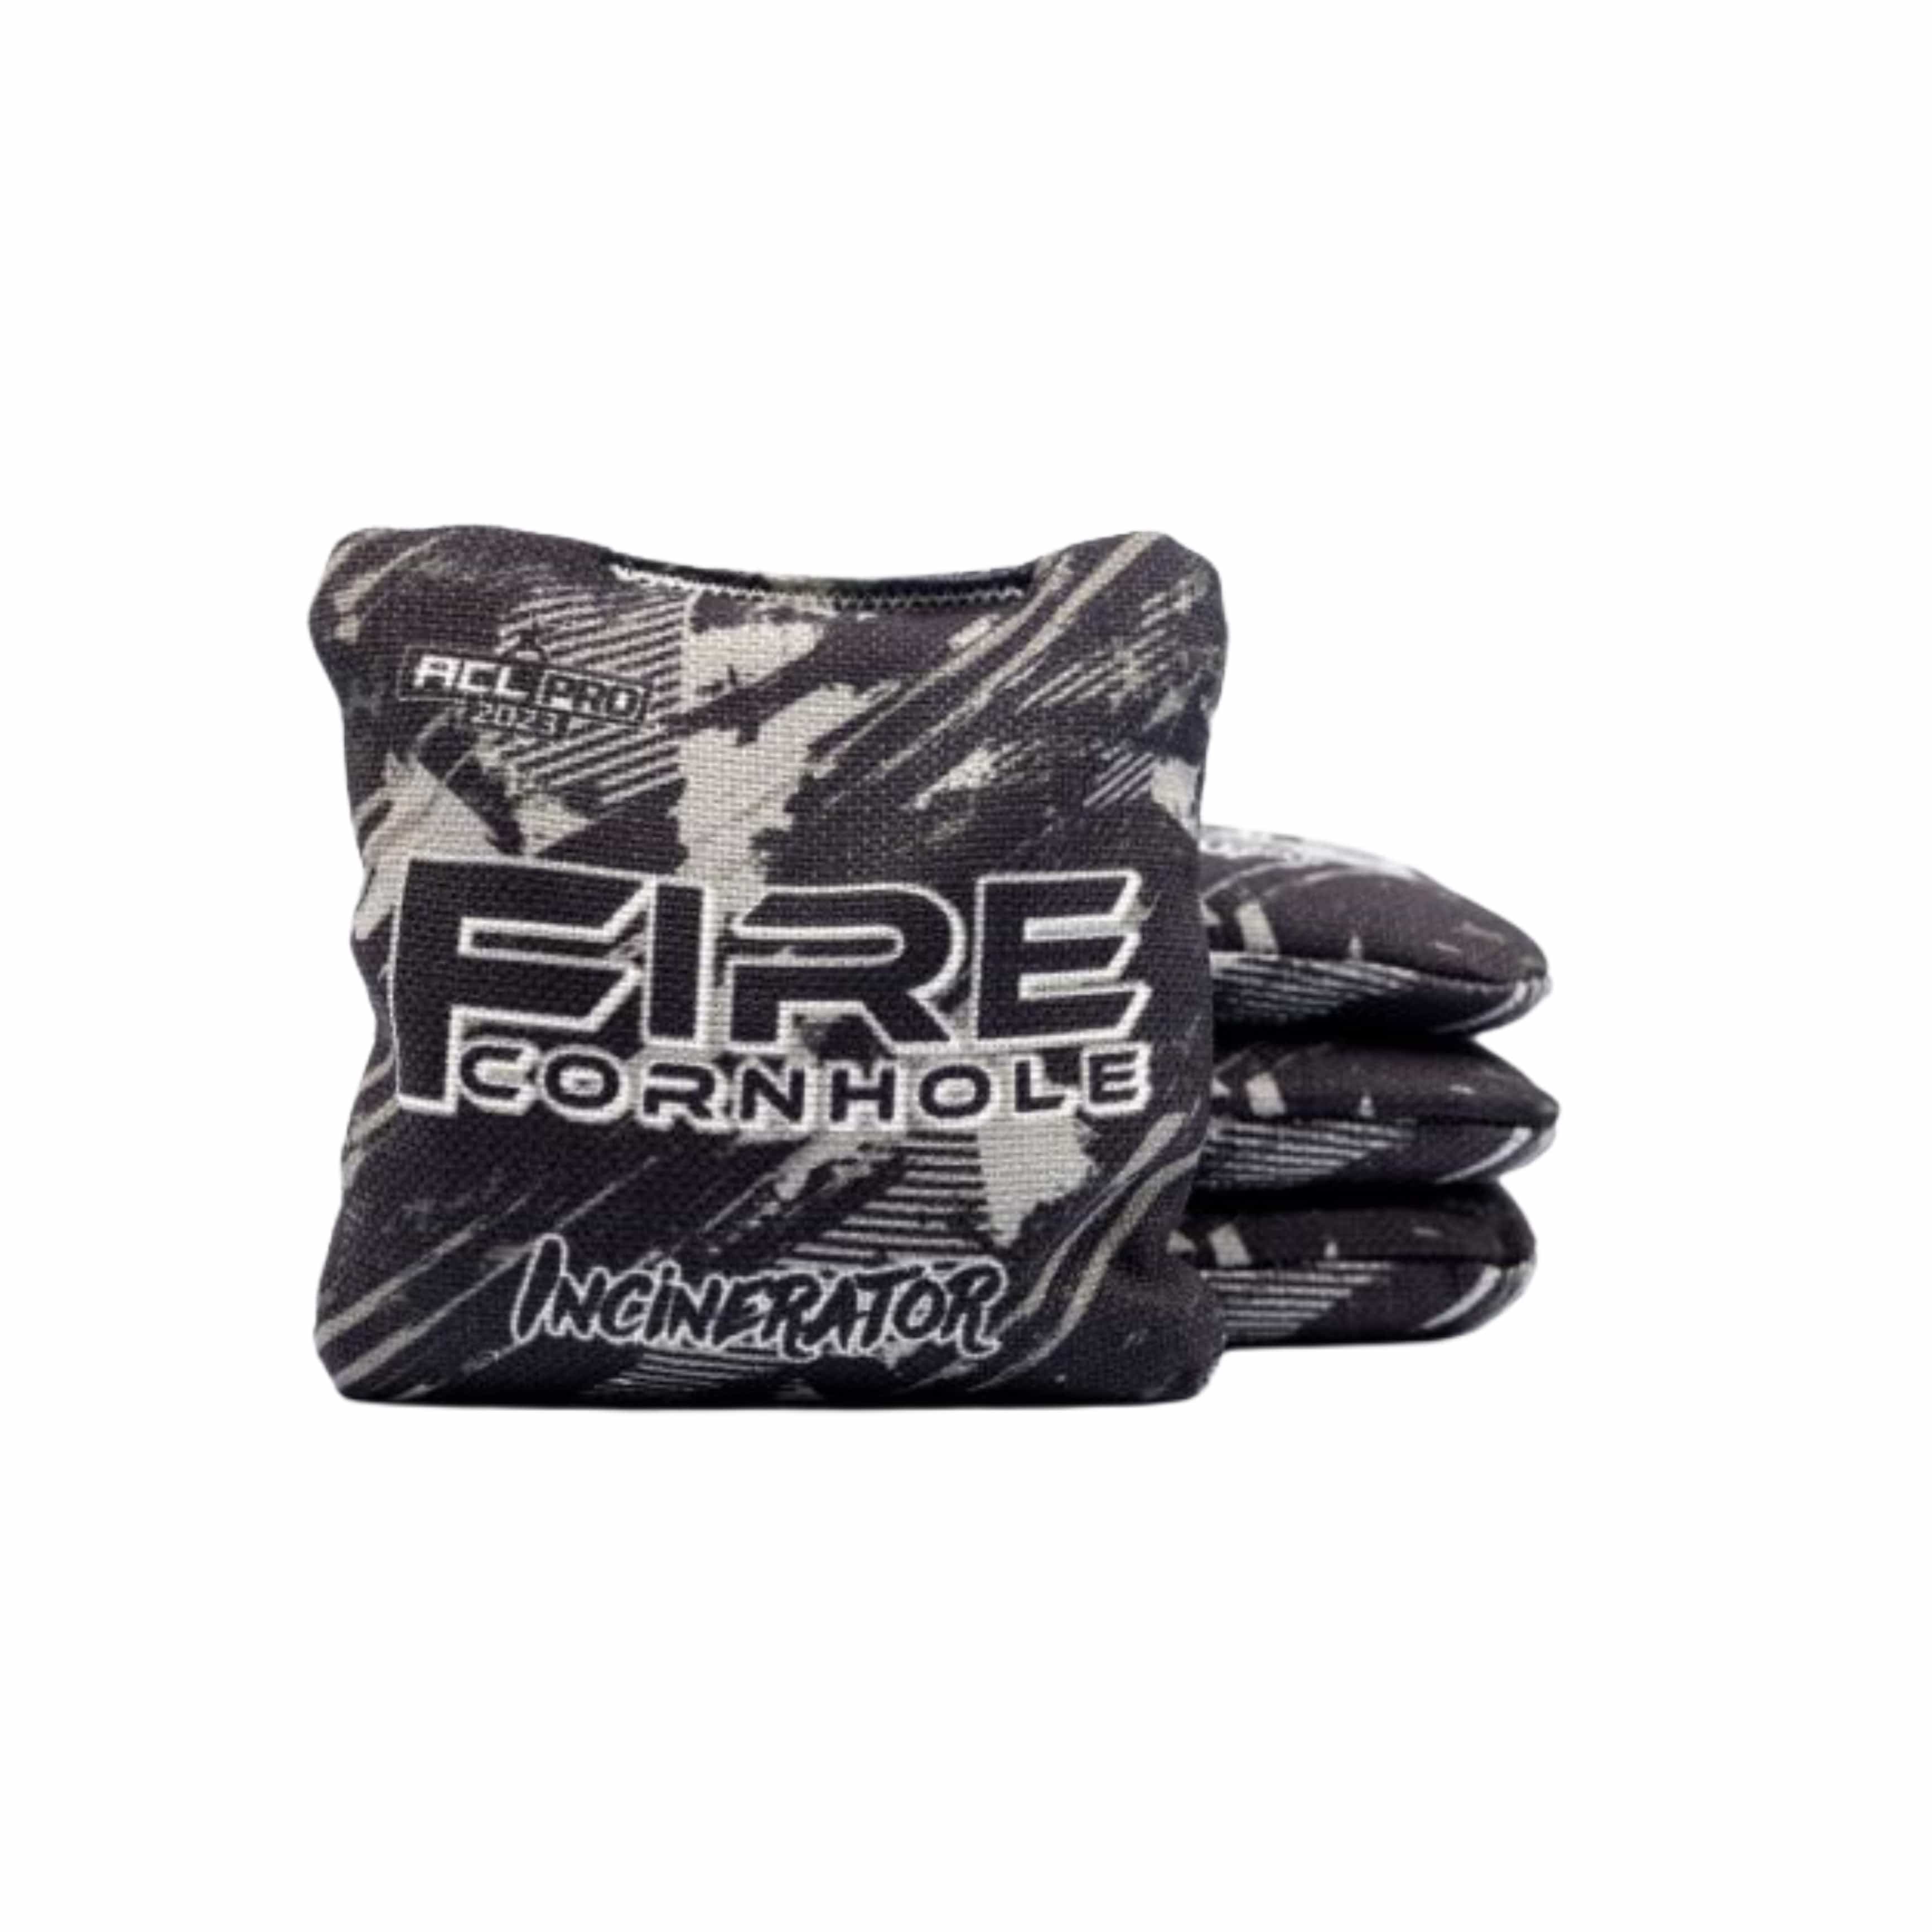 Fire Incinerator ACL cornhole bags in black